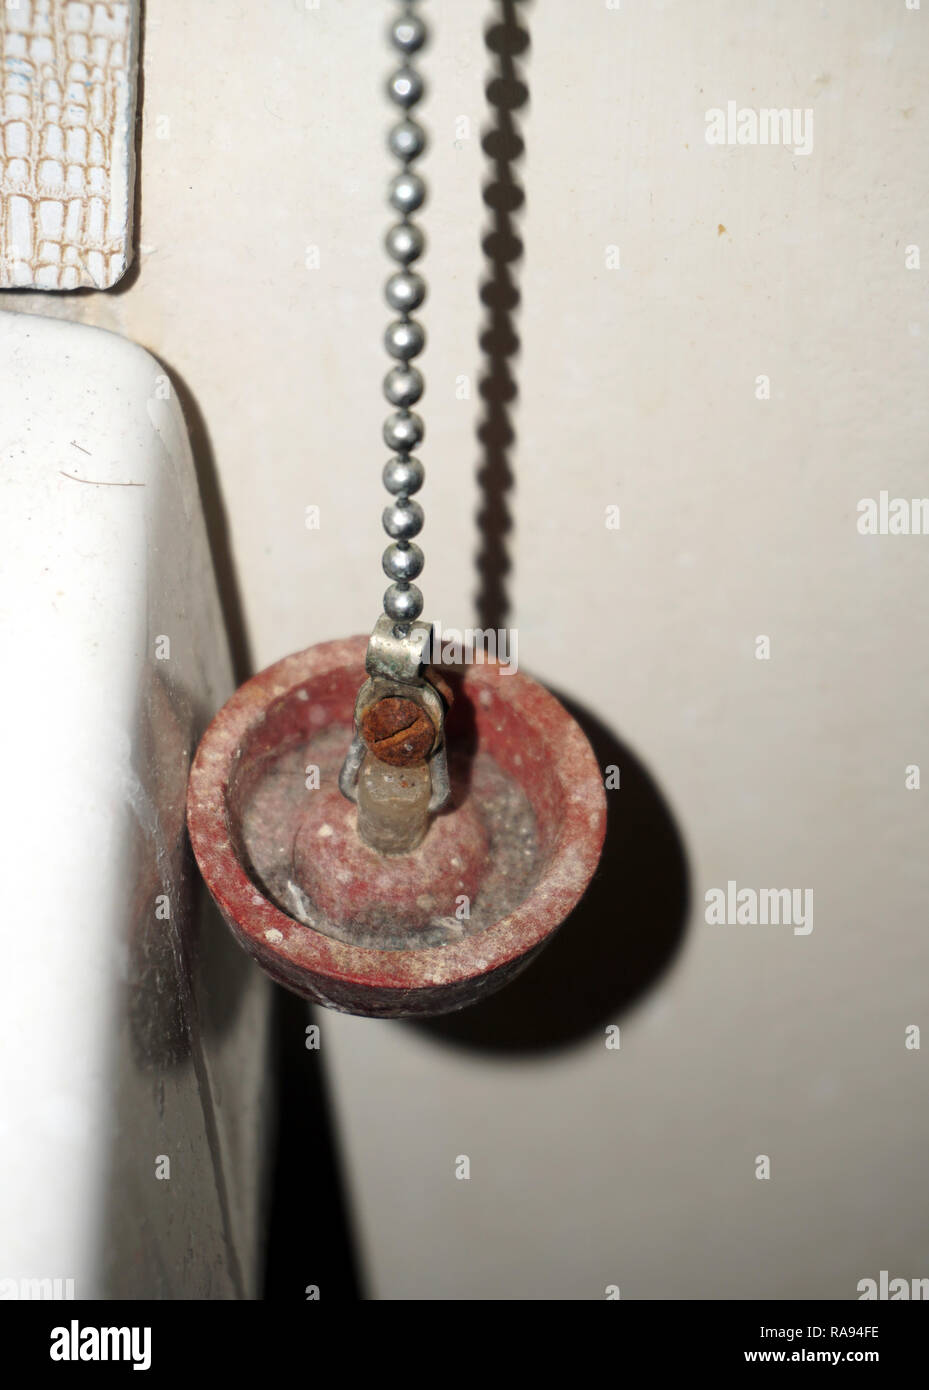 dirty bathroom sink plug on a chain Stock Photo